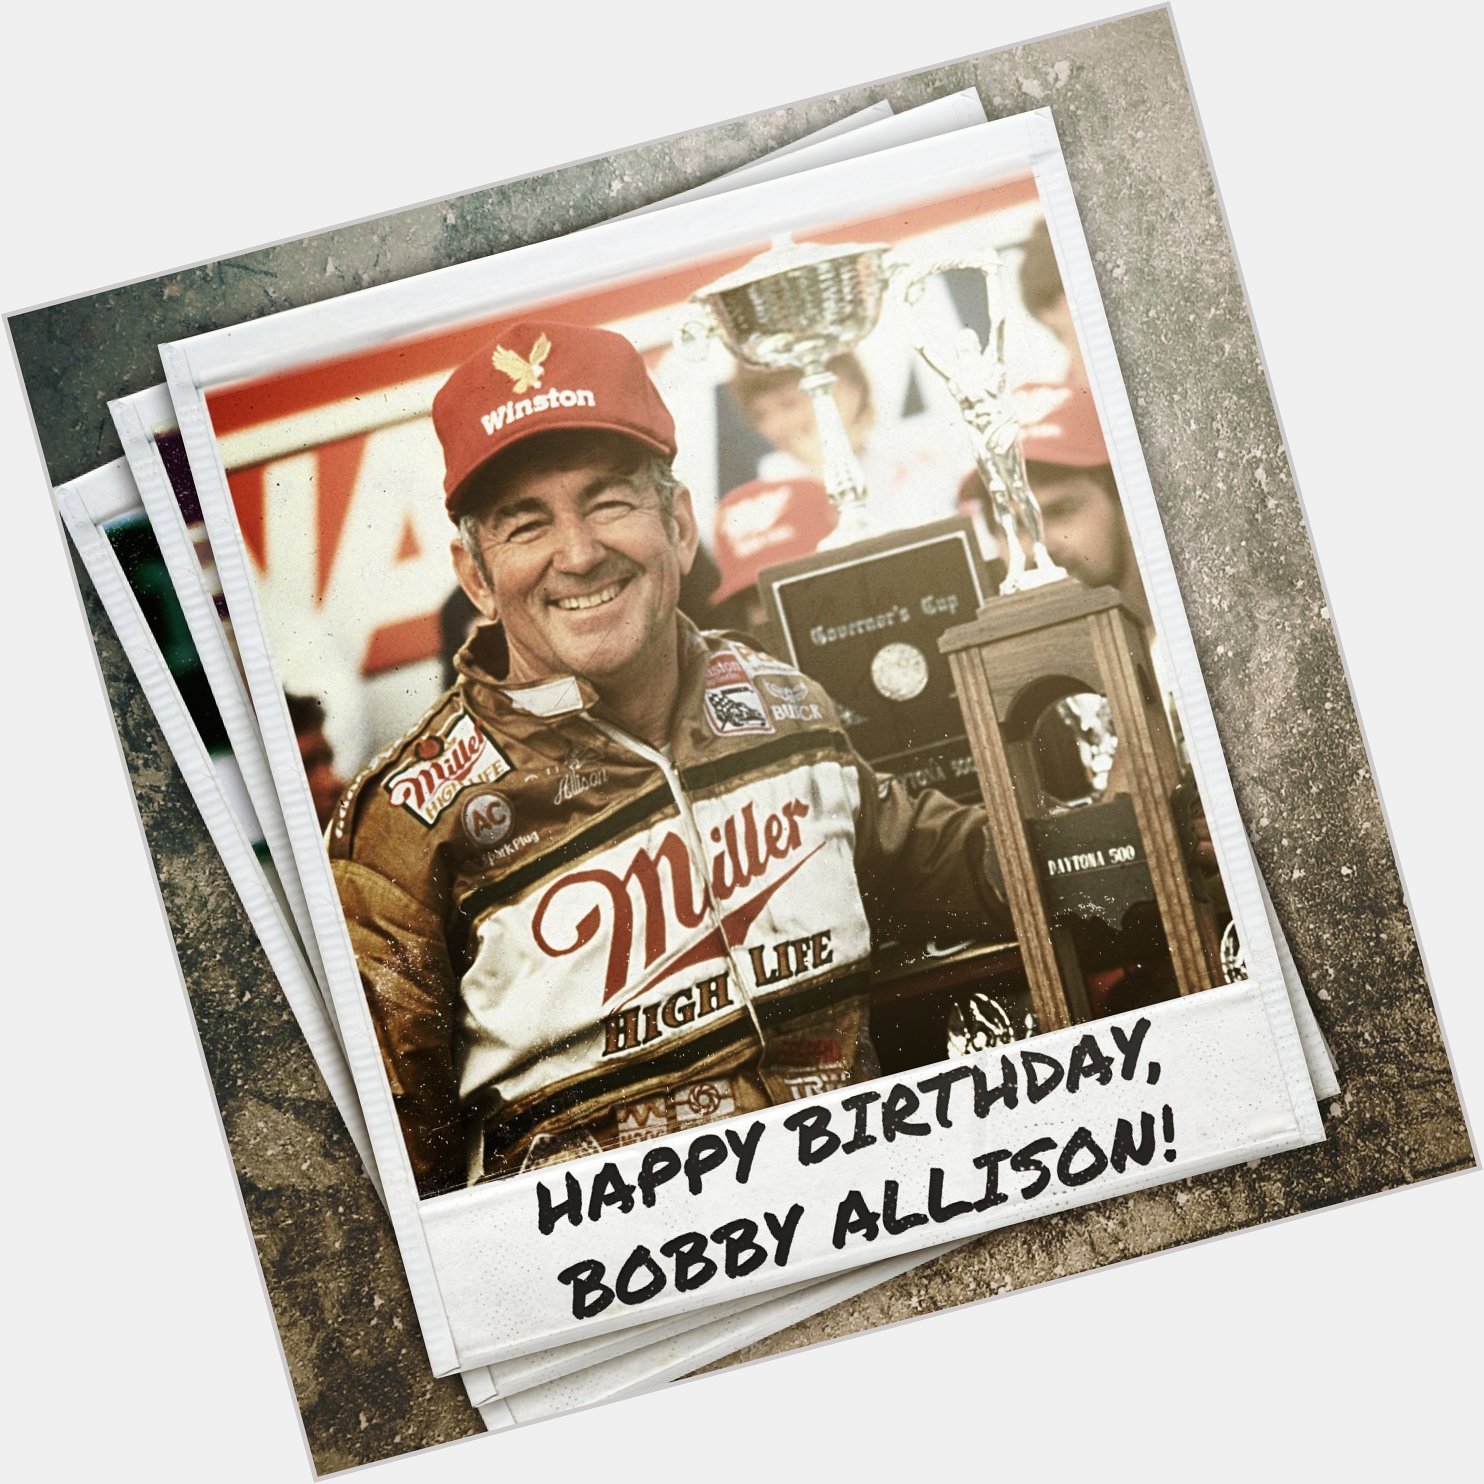 Happy birthday to the three-time Daytona 500 winner, 1983 champion, and inductee Bobby Allison! 